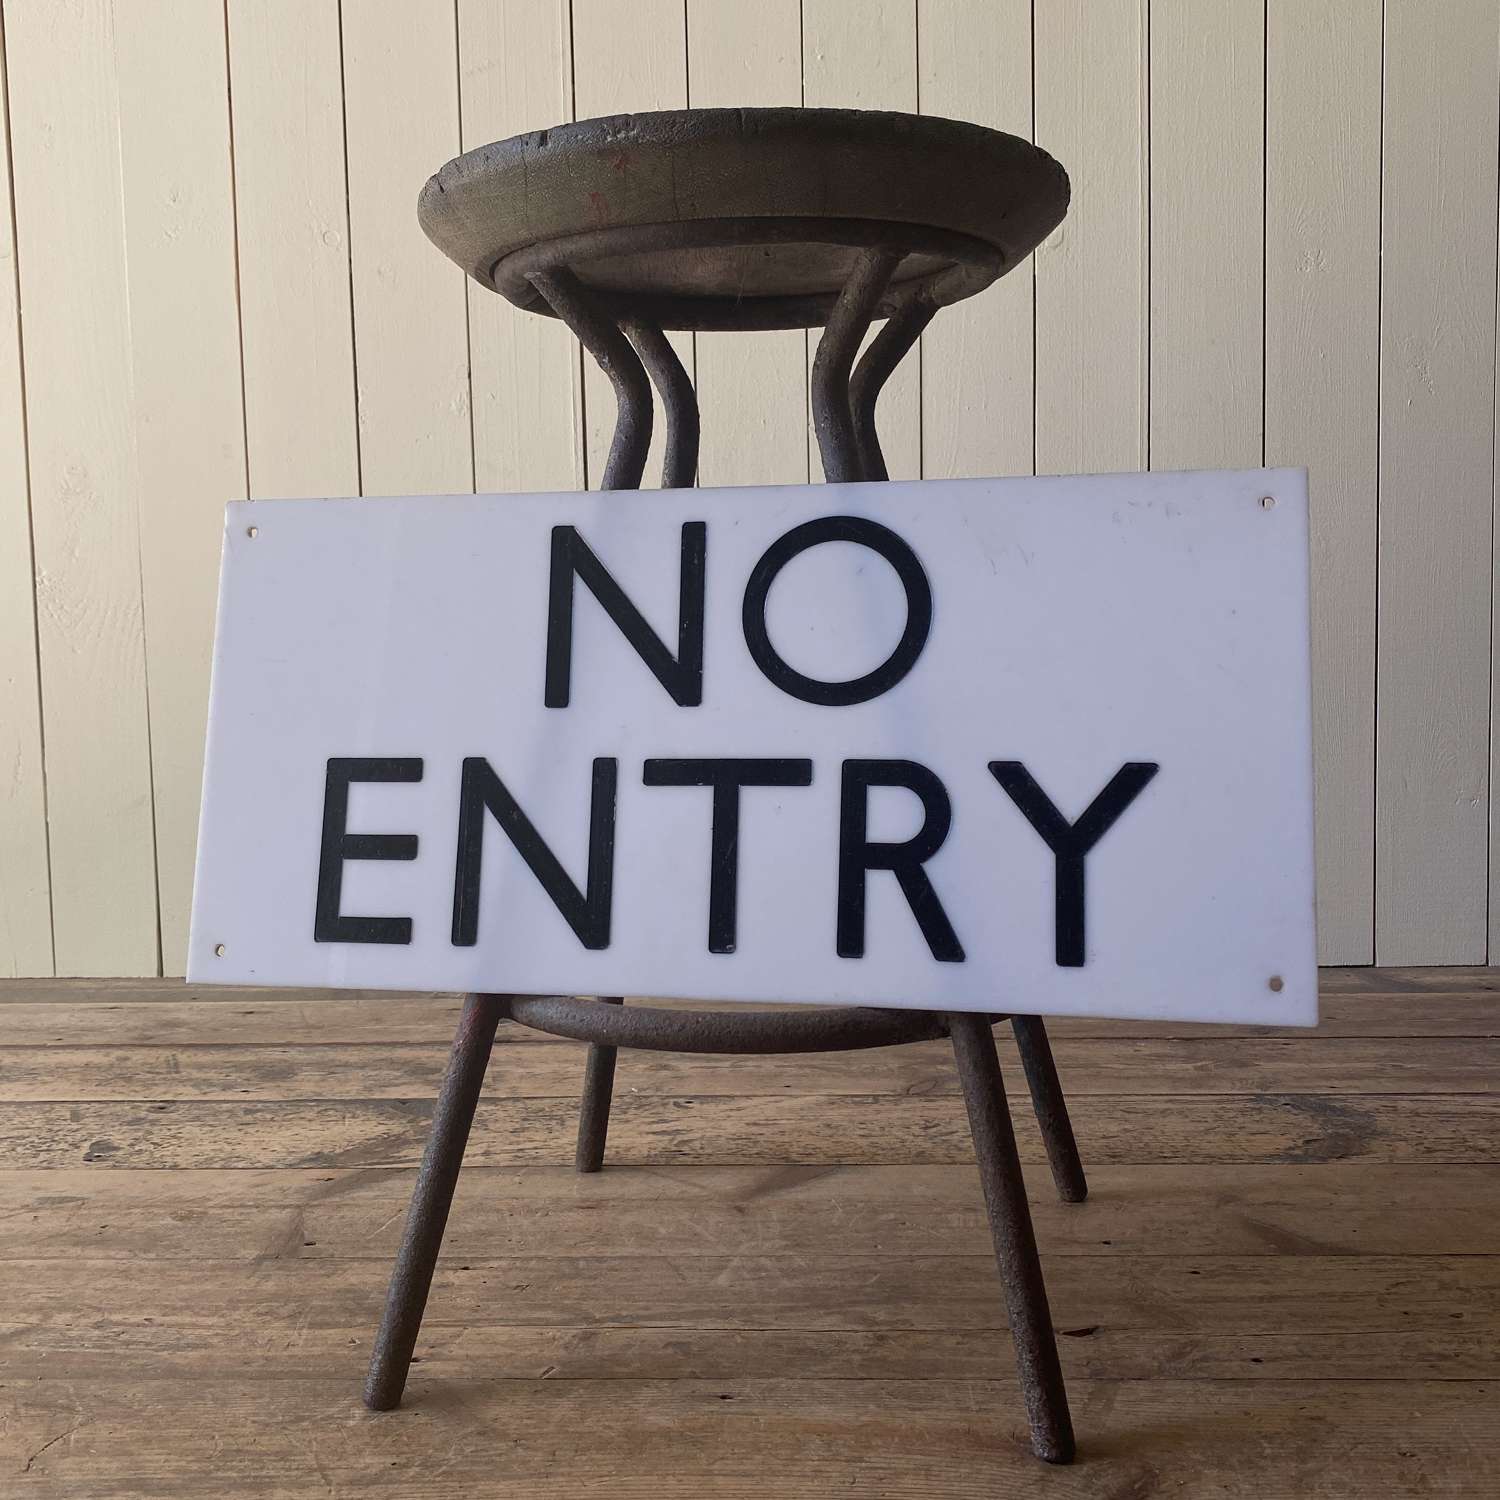 No Entry sign